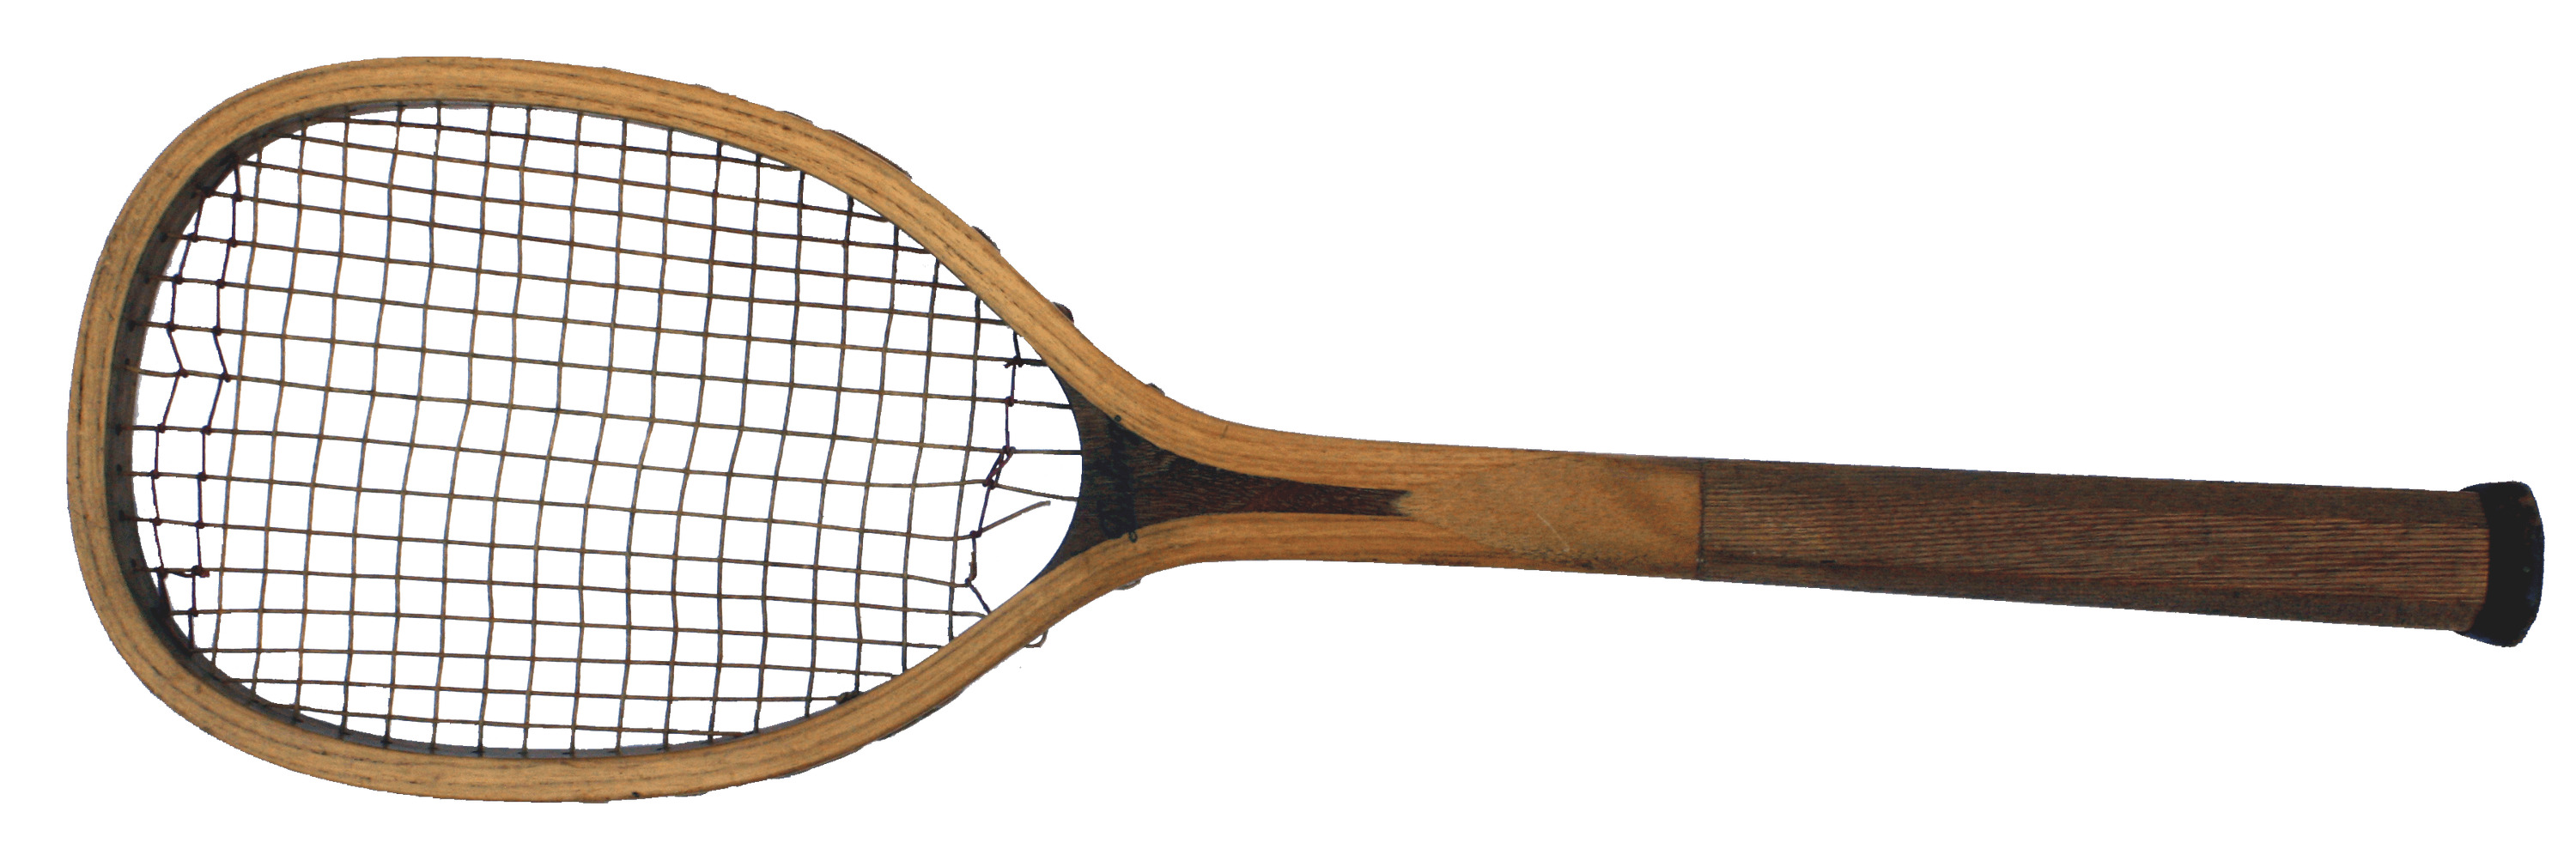 Antique Tennis Racket png